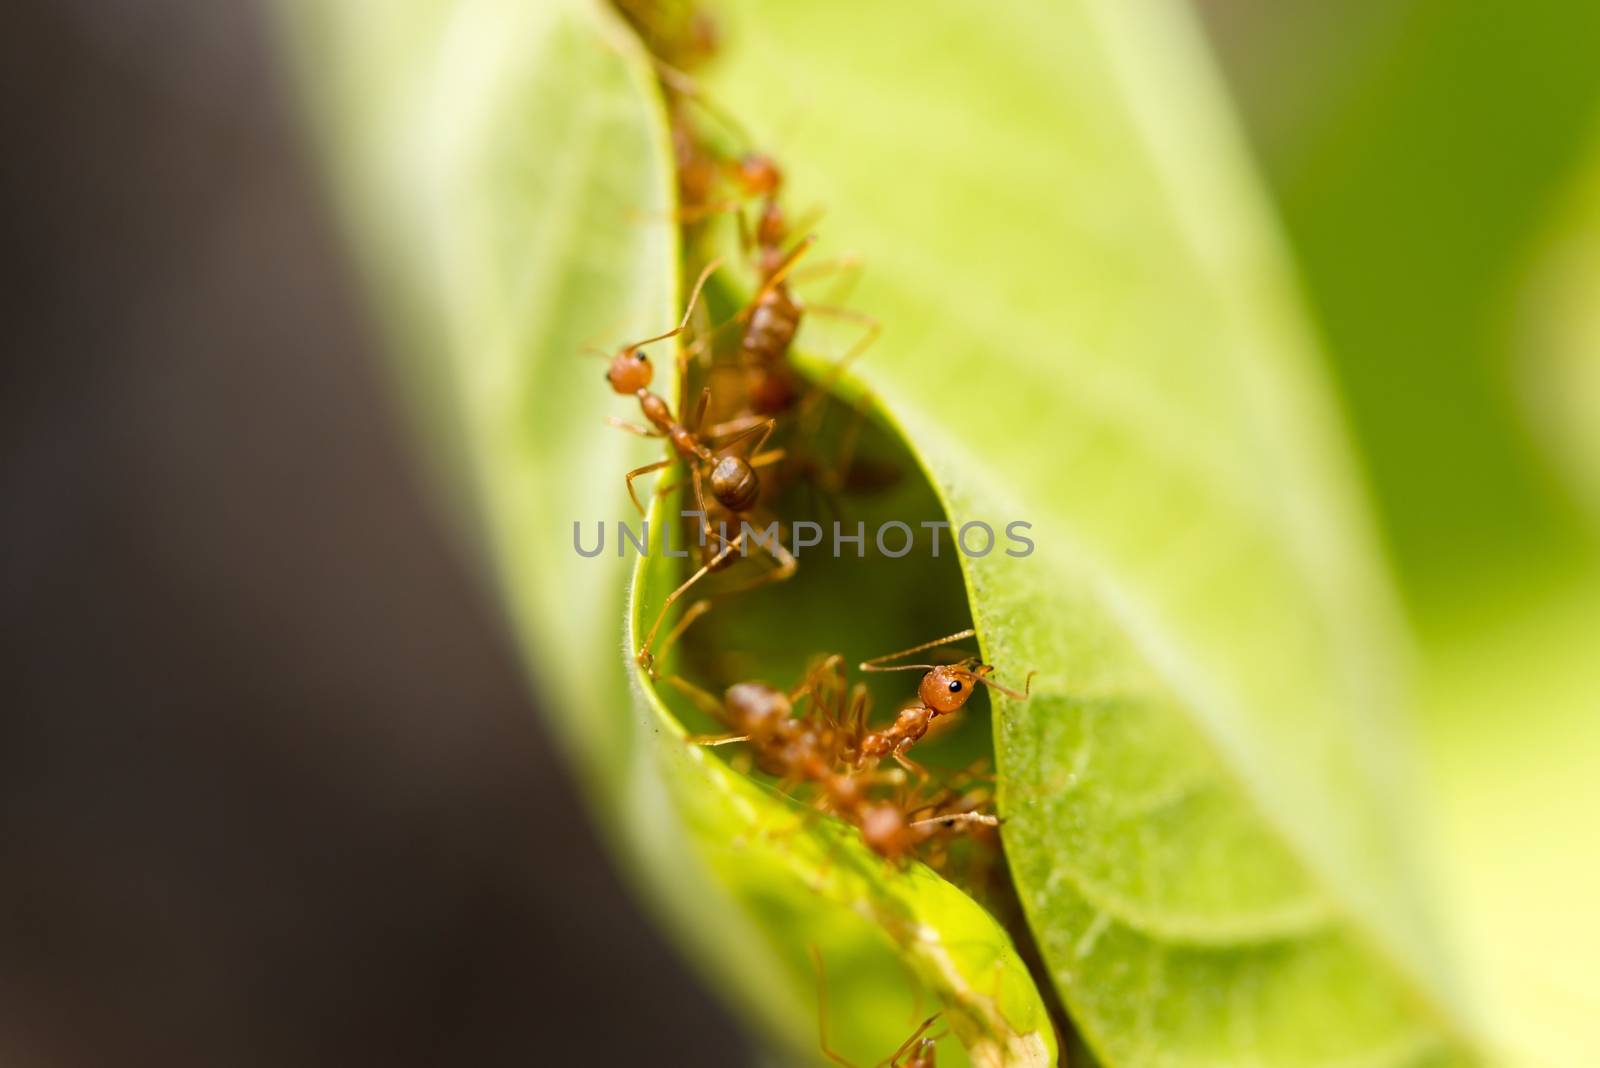 Weaver ants in green leaves by iryna_rasko